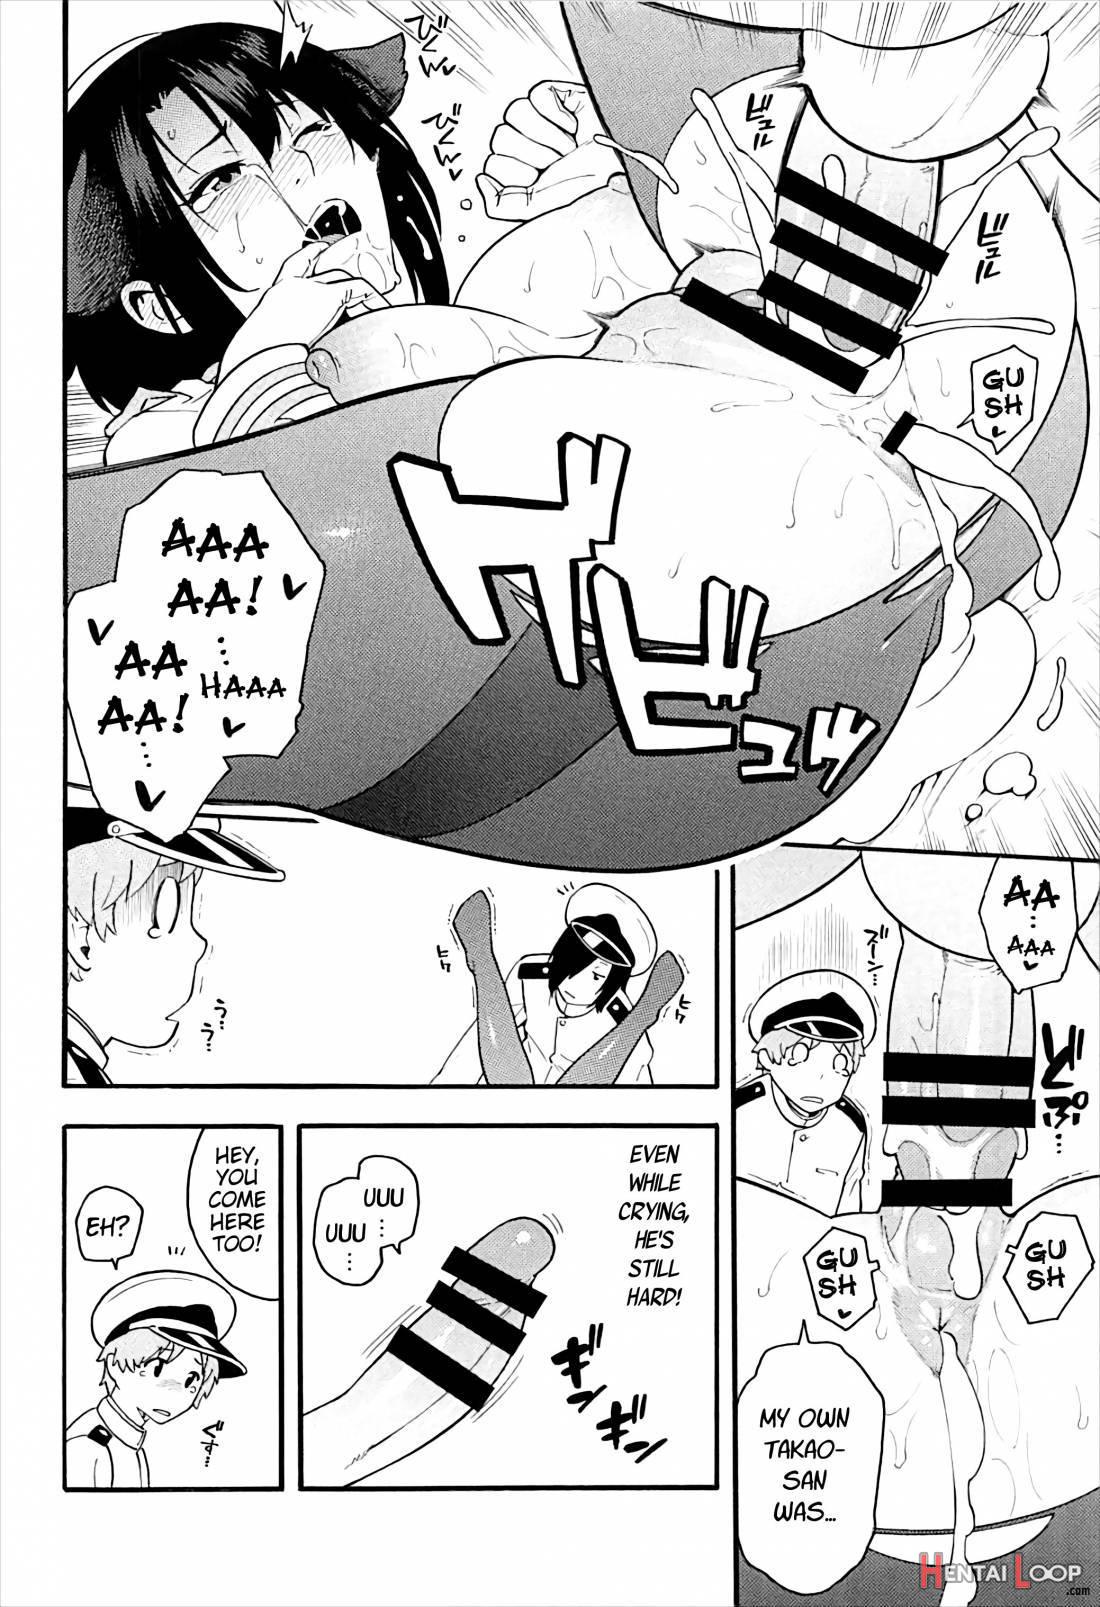 Takao AS page 13